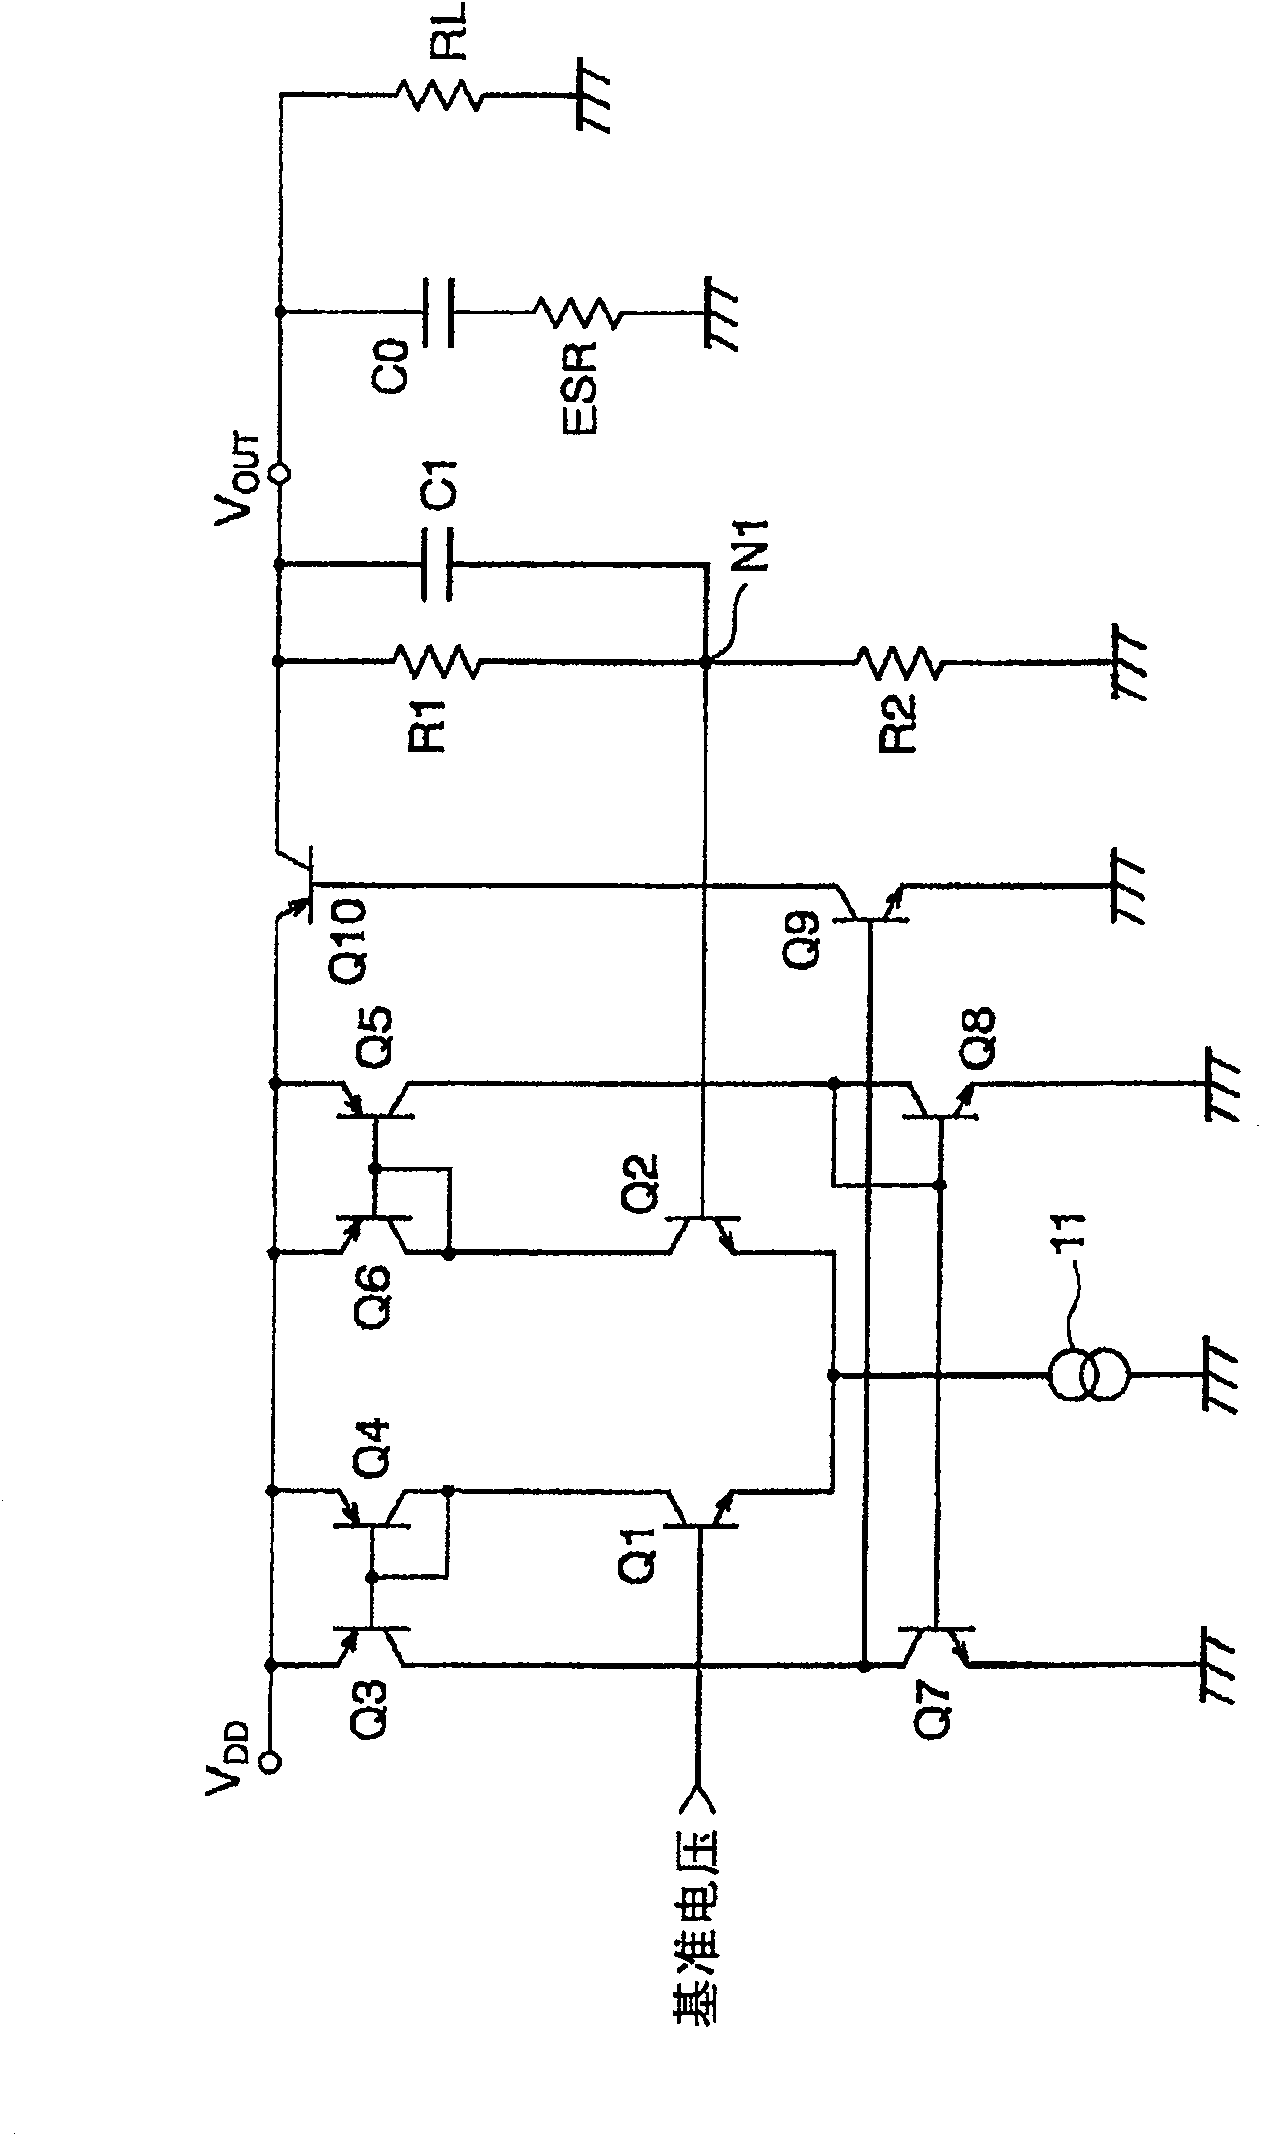 Voltage stabilizer circuit